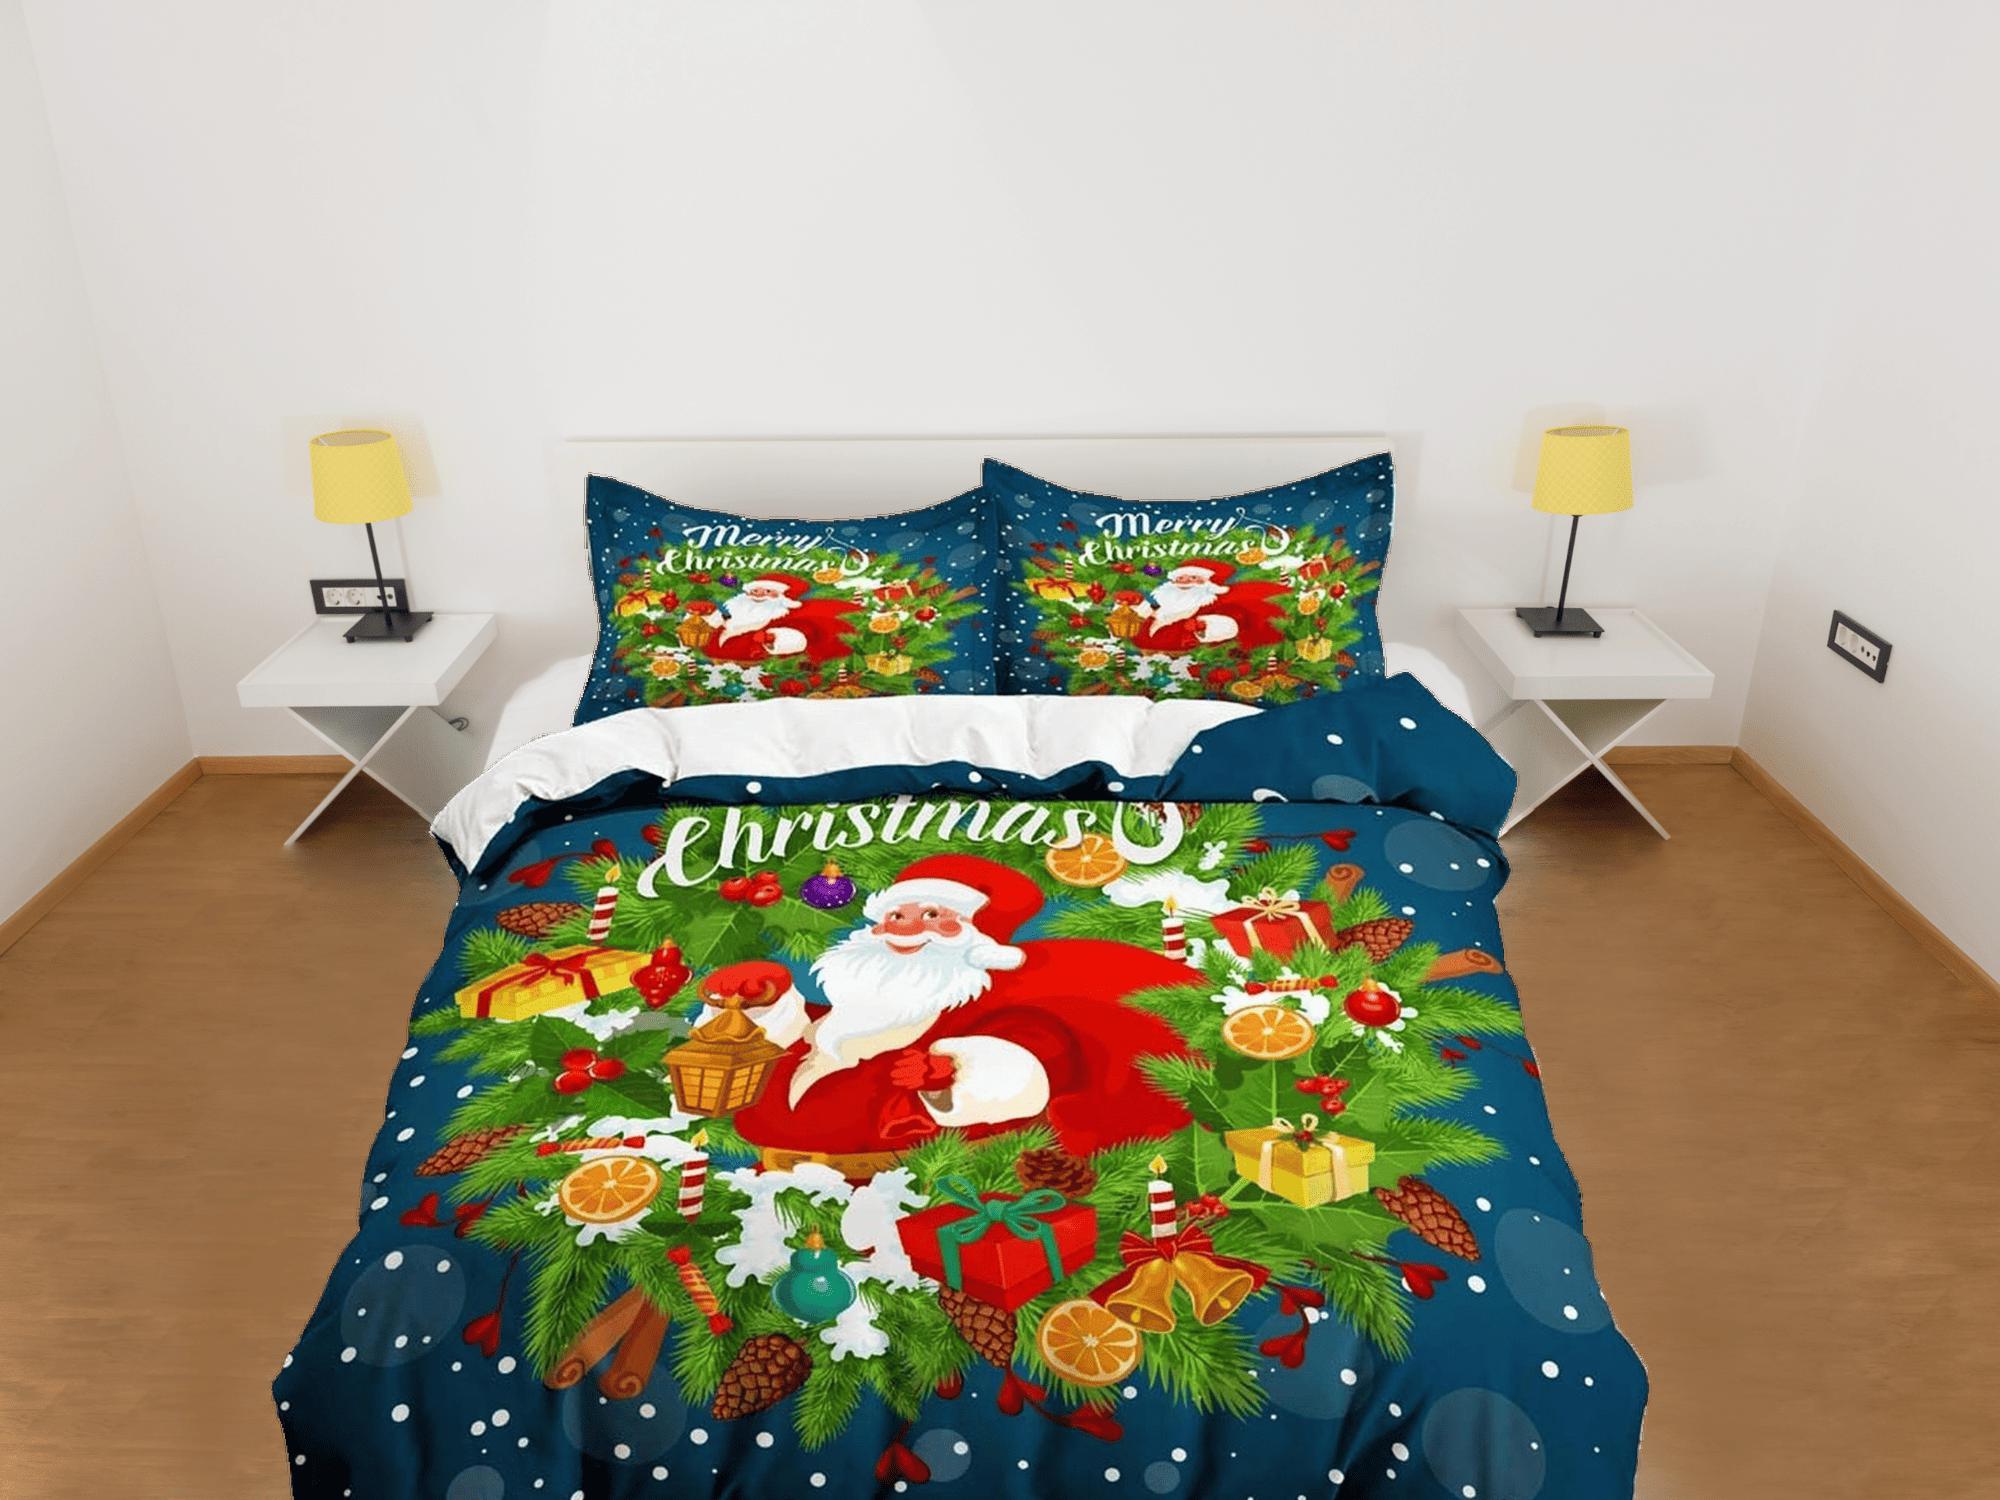 daintyduvet Santa Claus Merry Christmas bedding & pillowcase holiday gift blue duvet cover king queen full twin toddler bedding baby Christmas farmhouse